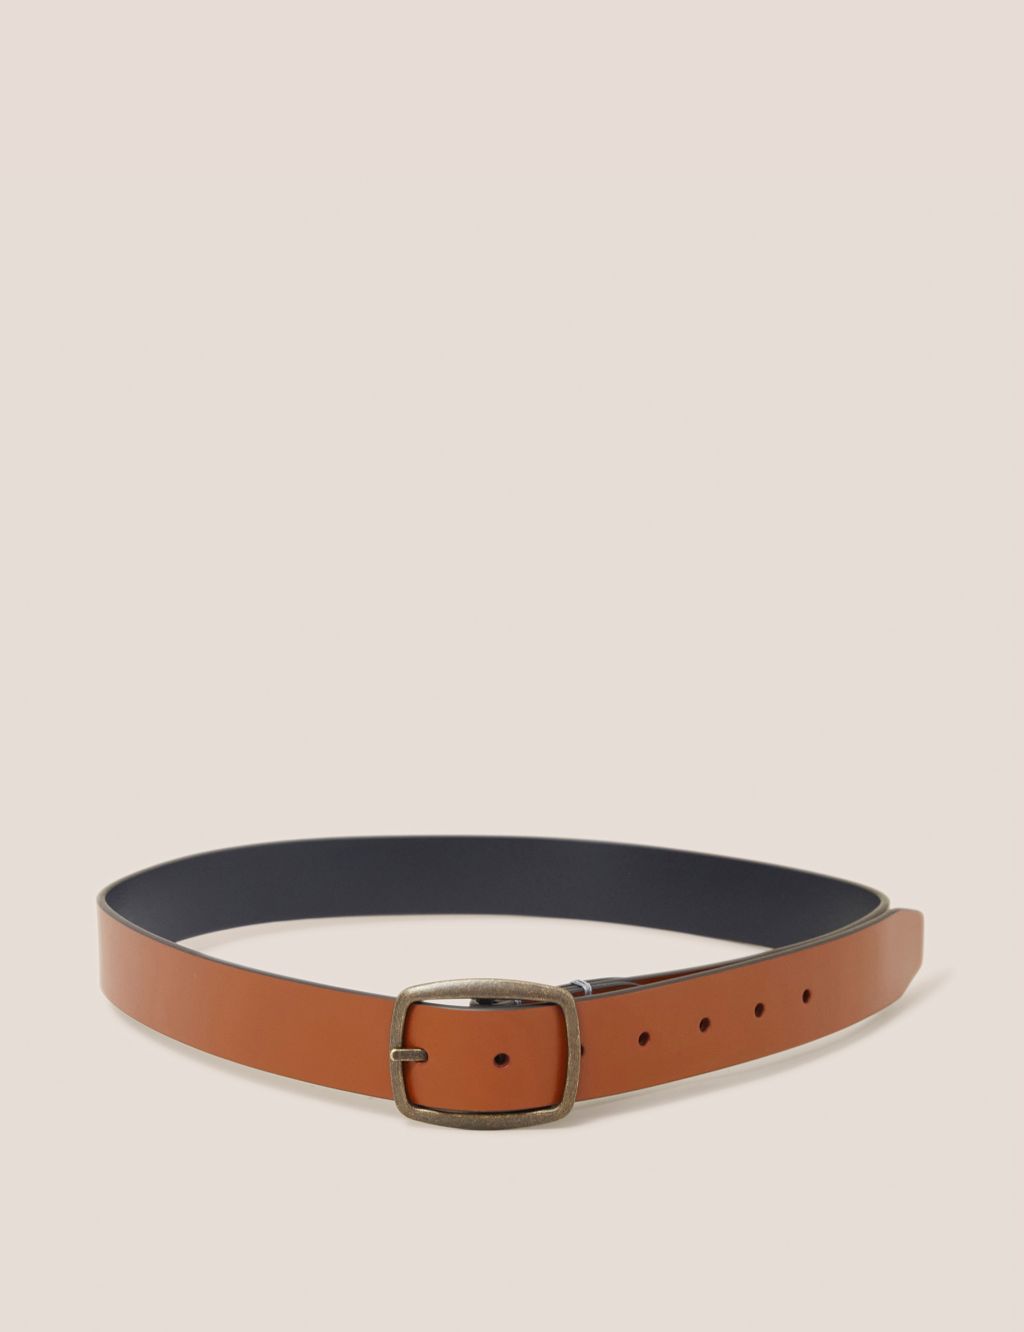 Leather Reversible Belt image 1